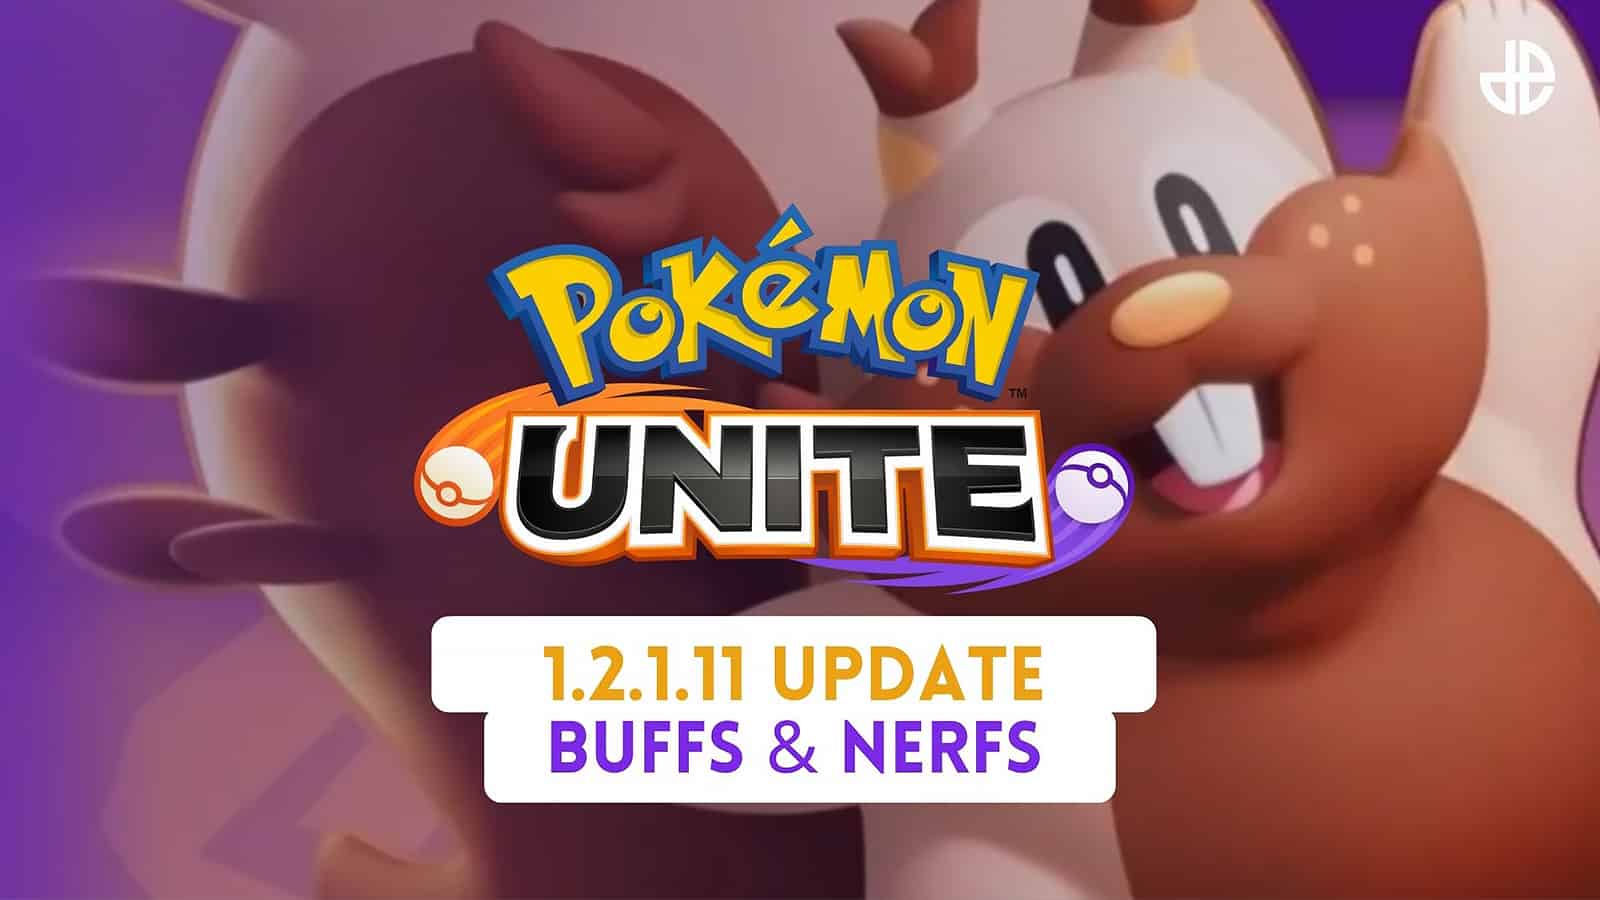 Pokemon Unite Greedent next to Update image